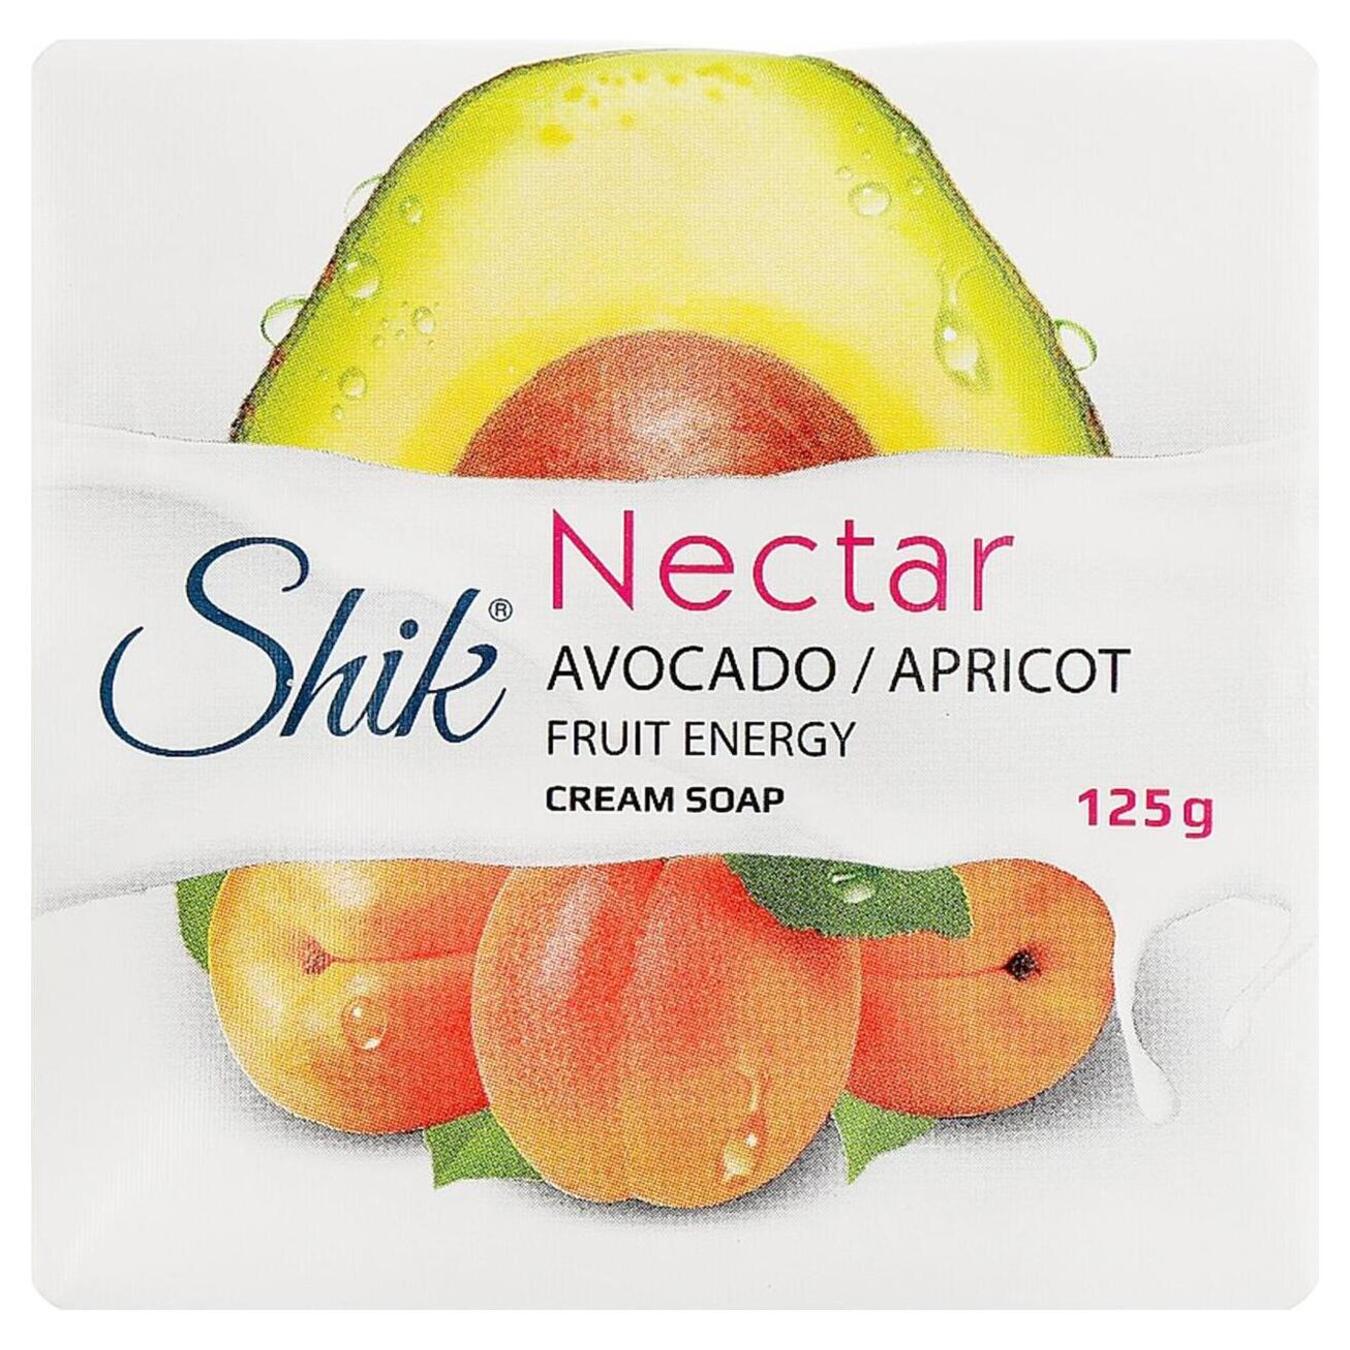 Cream soap Shik nectar avocado and apricot 125g